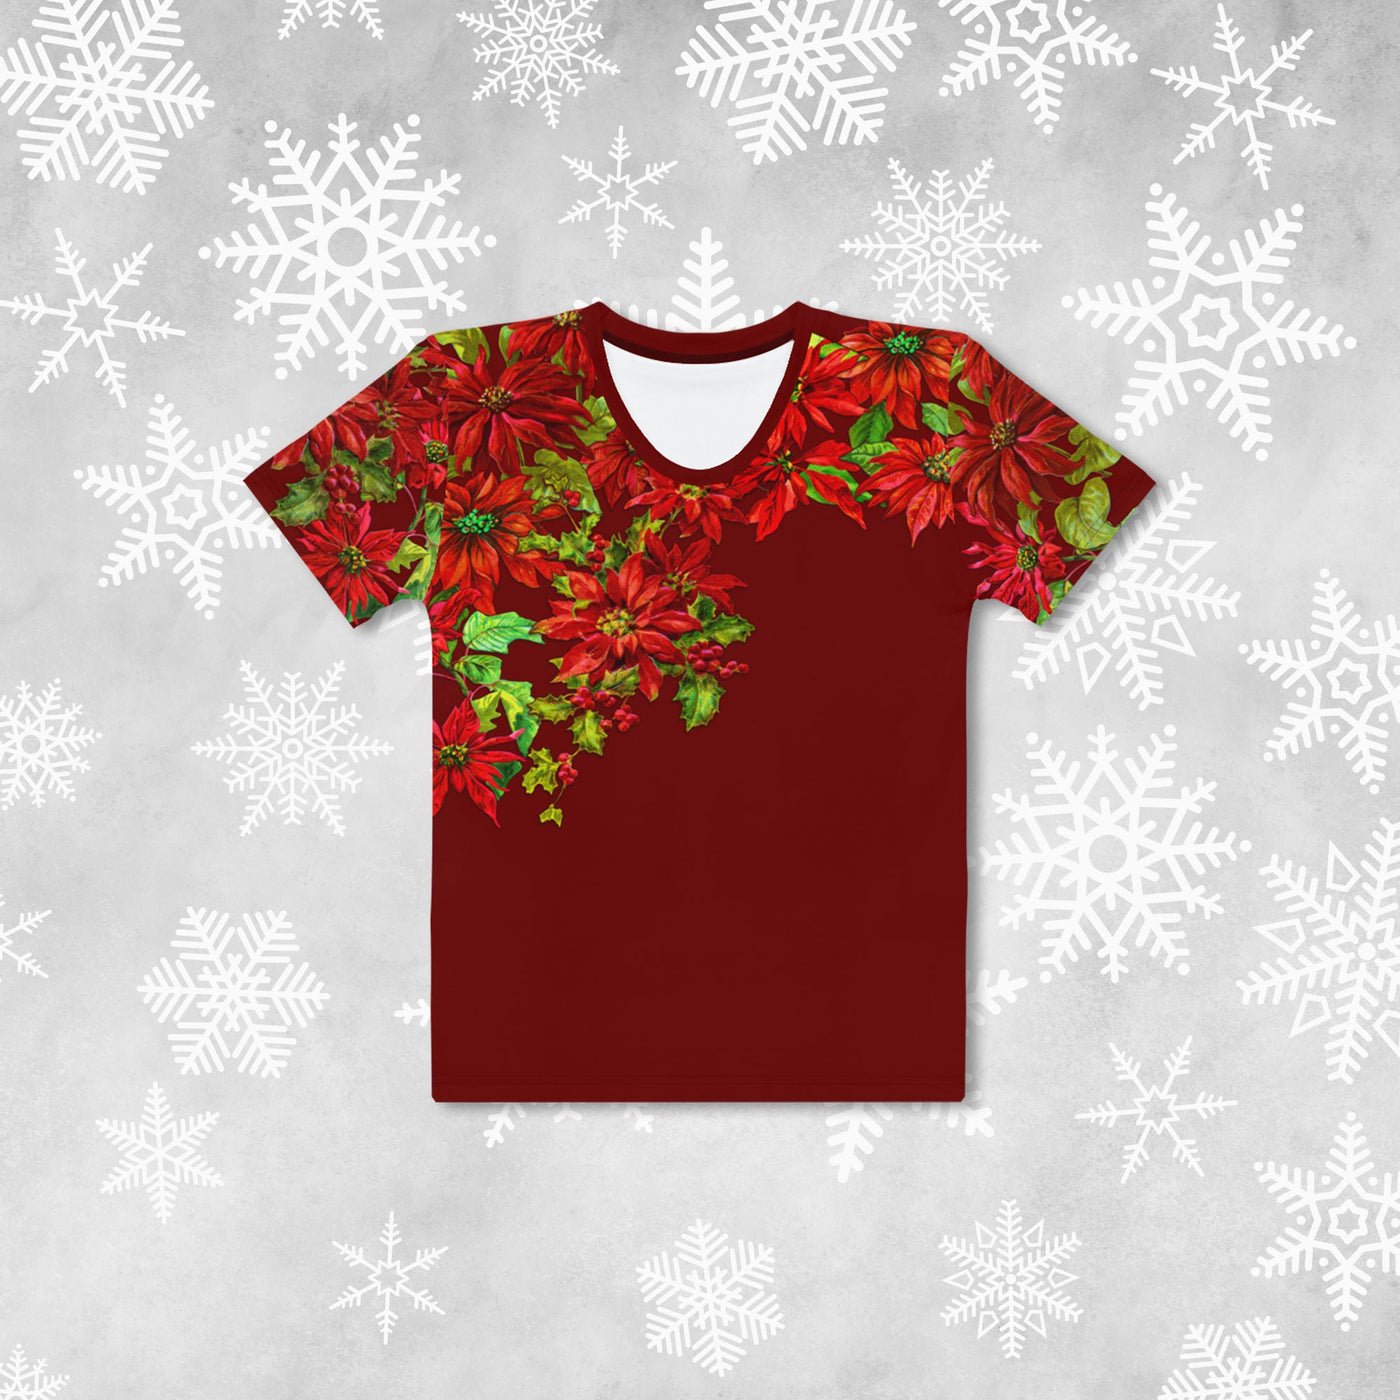 Poinsettia Red - Women's T-shirt